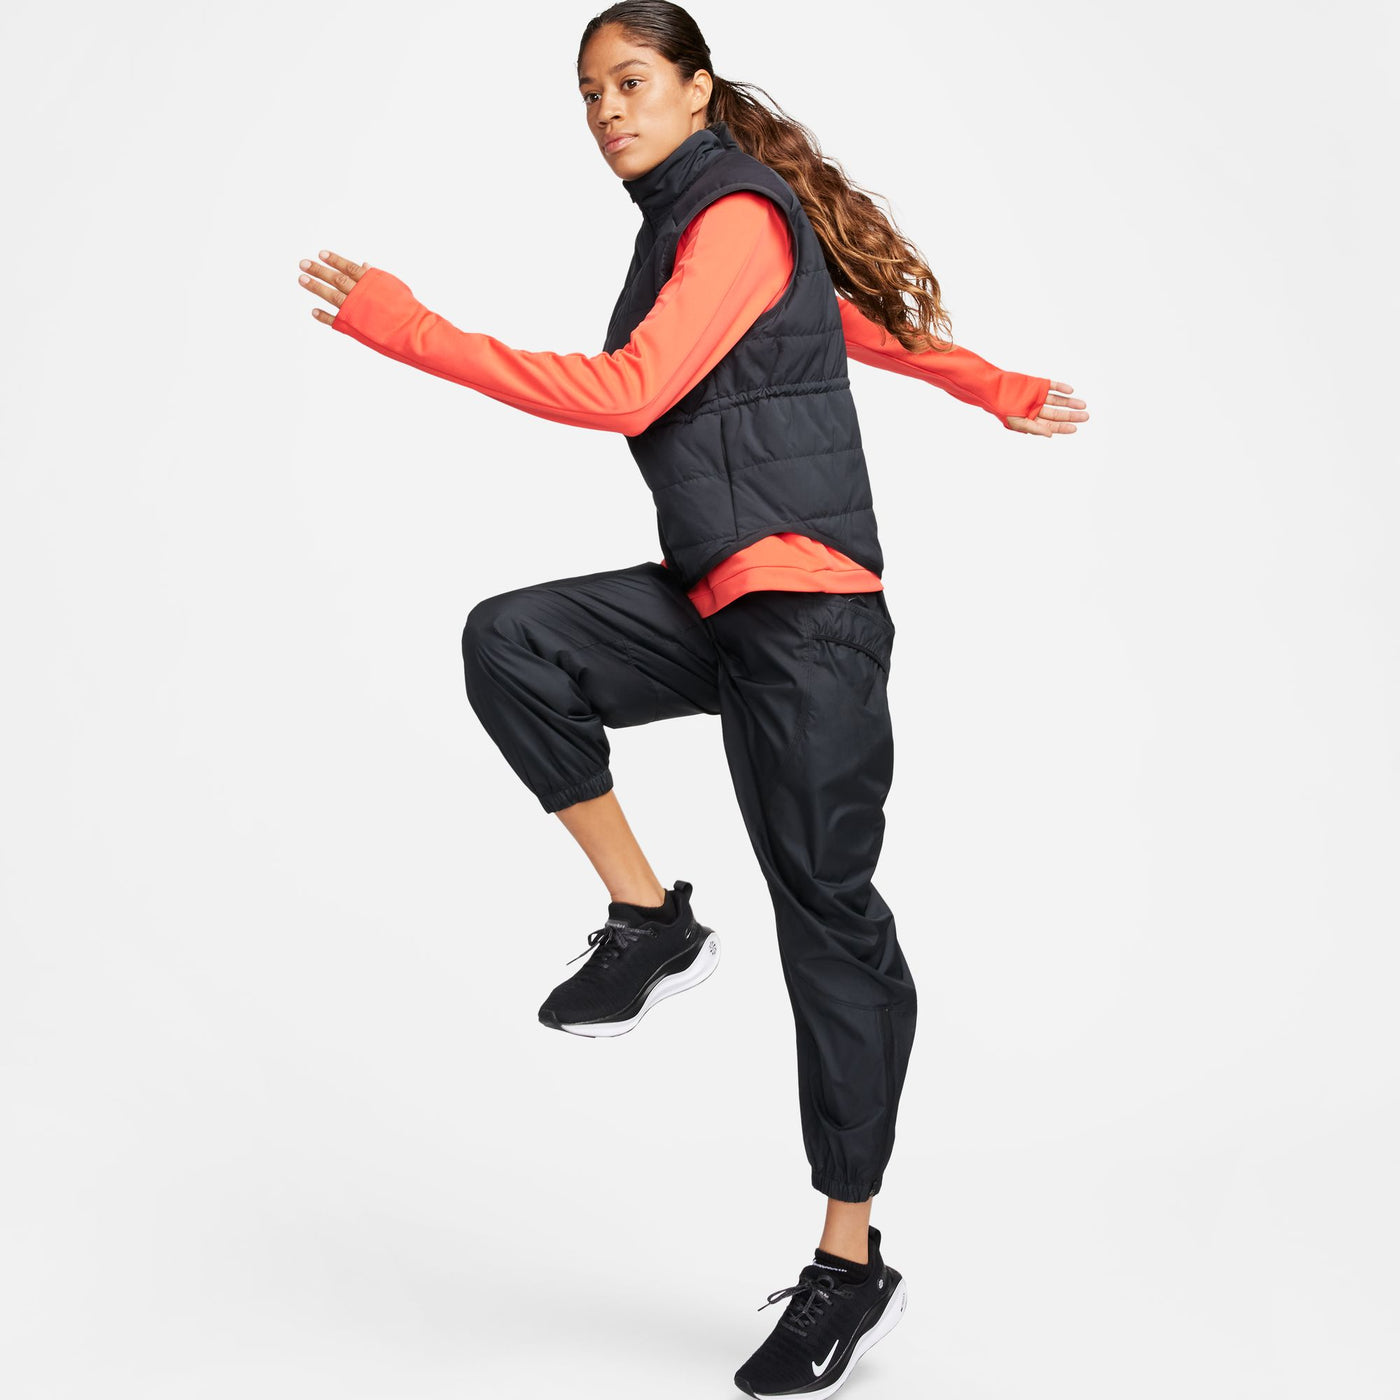 Women's Nike Swift Therma-Fit Fill Vest - FB7537-010